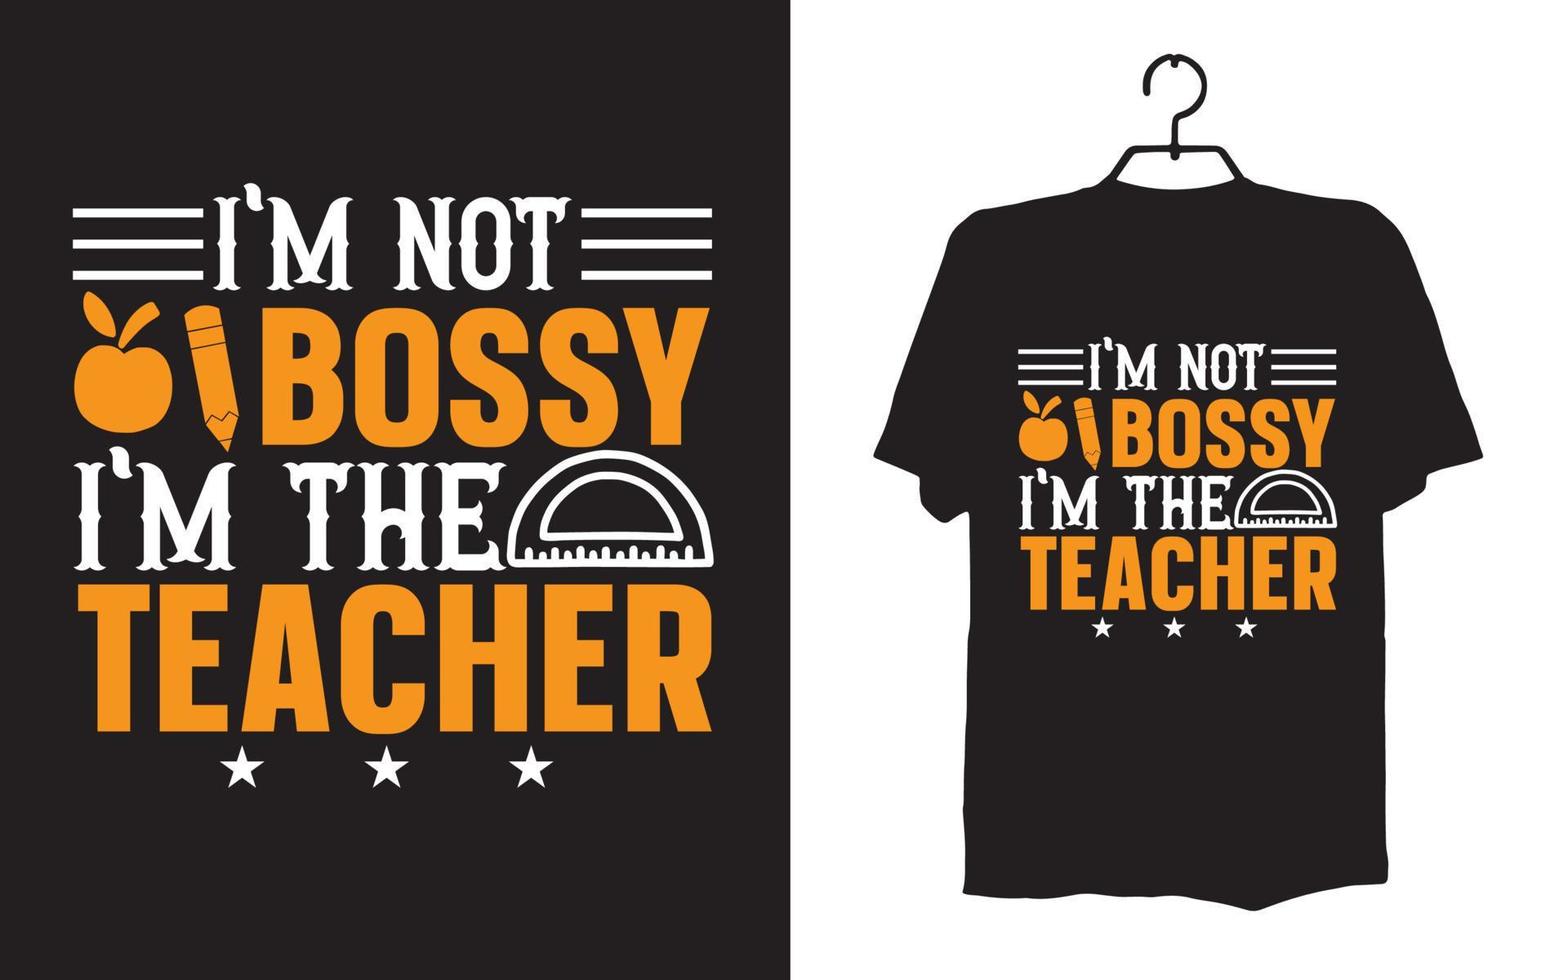 lärare t-shirt design vektor